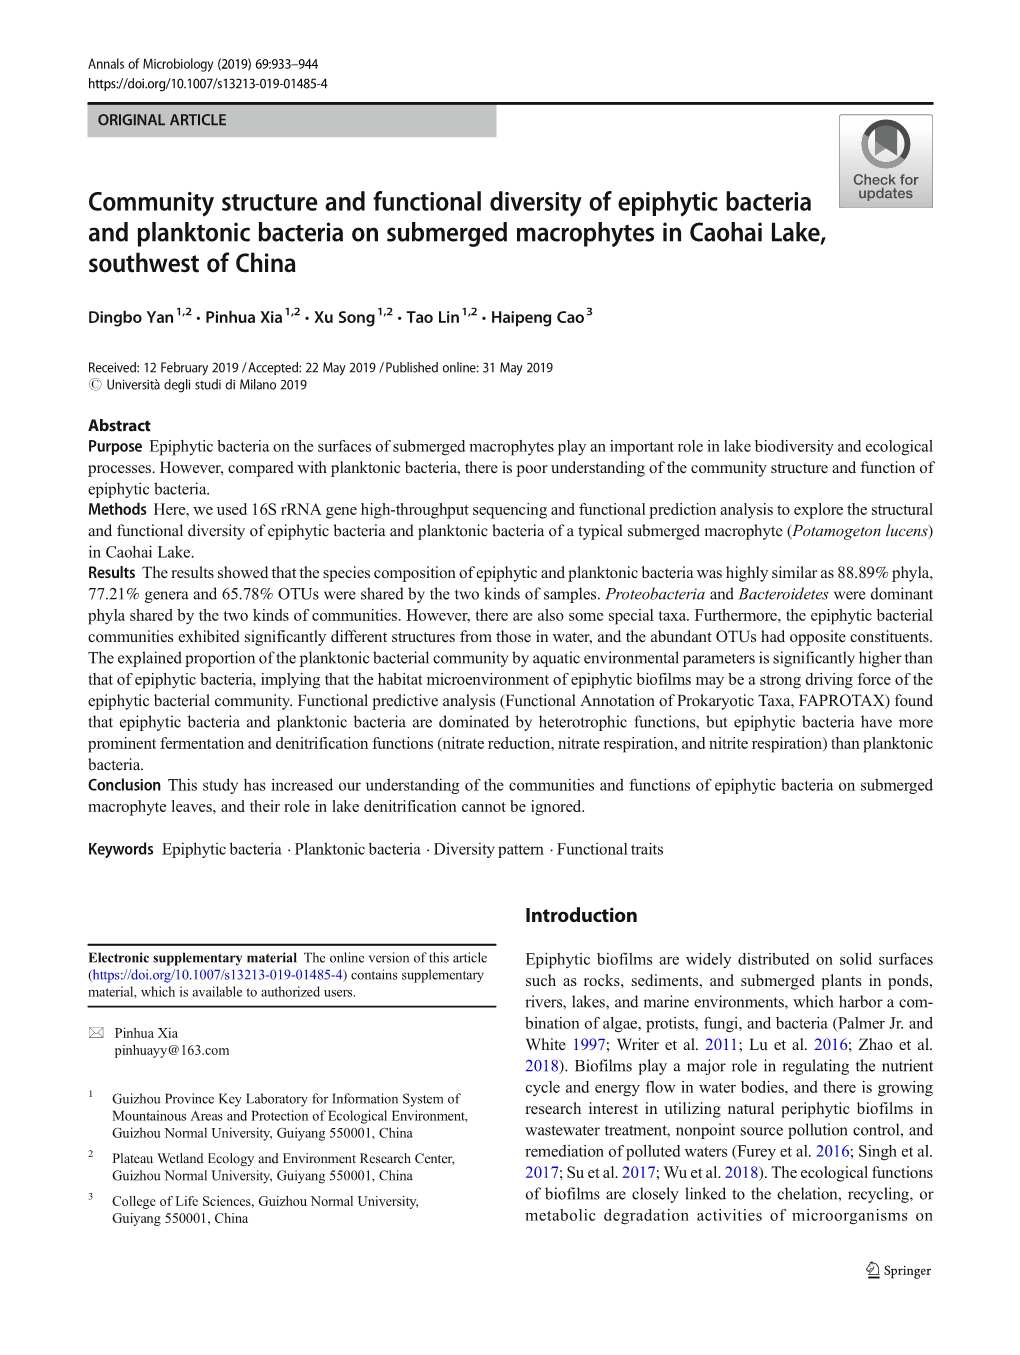 Community Structure and Functional Diversity of Epiphytic Bacteria and Planktonic Bacteria on Submerged Macrophytes in Caohai Lake, Southwest of China